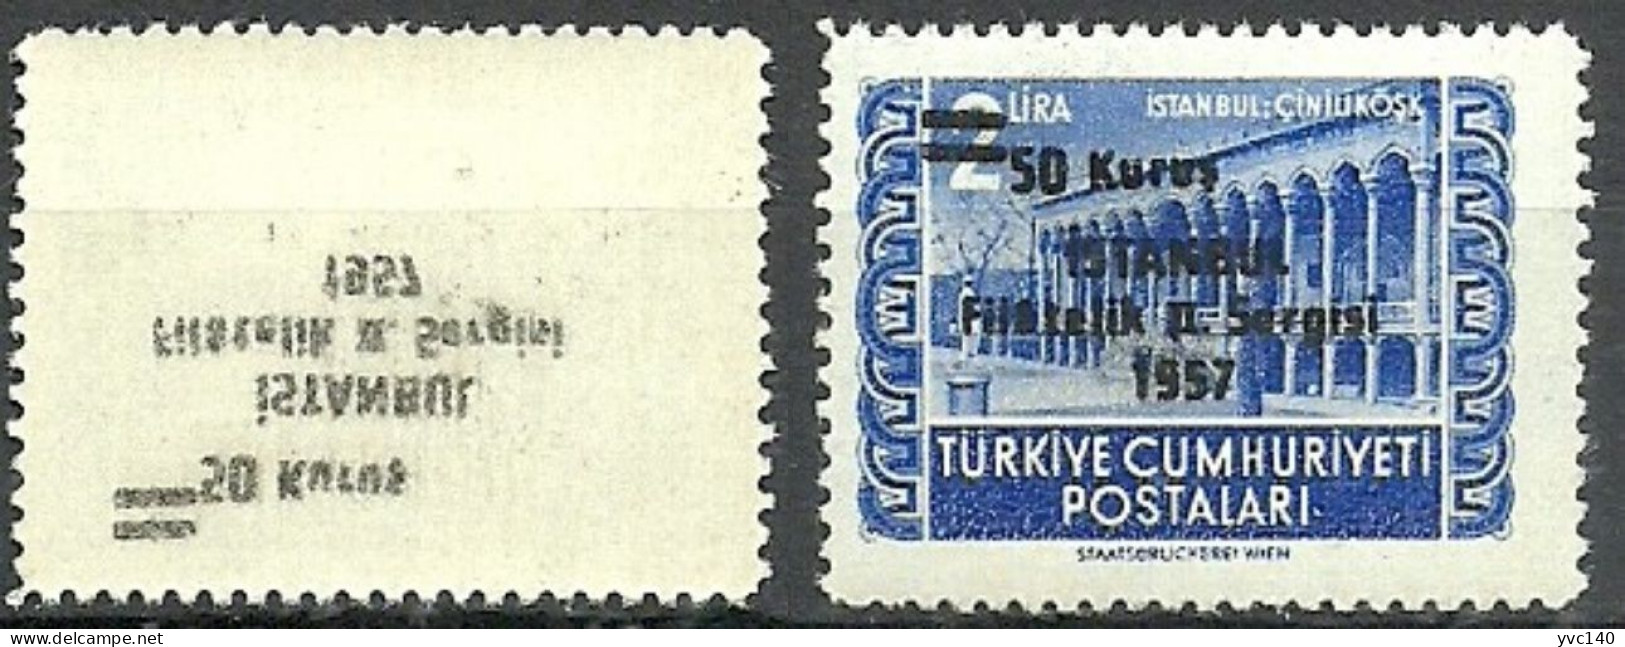 Turkey; 1957 Surcharged Commemorative Stamp For Istanbul Philately Exhibition ERROR "Abklatsch Surcharge" - Neufs